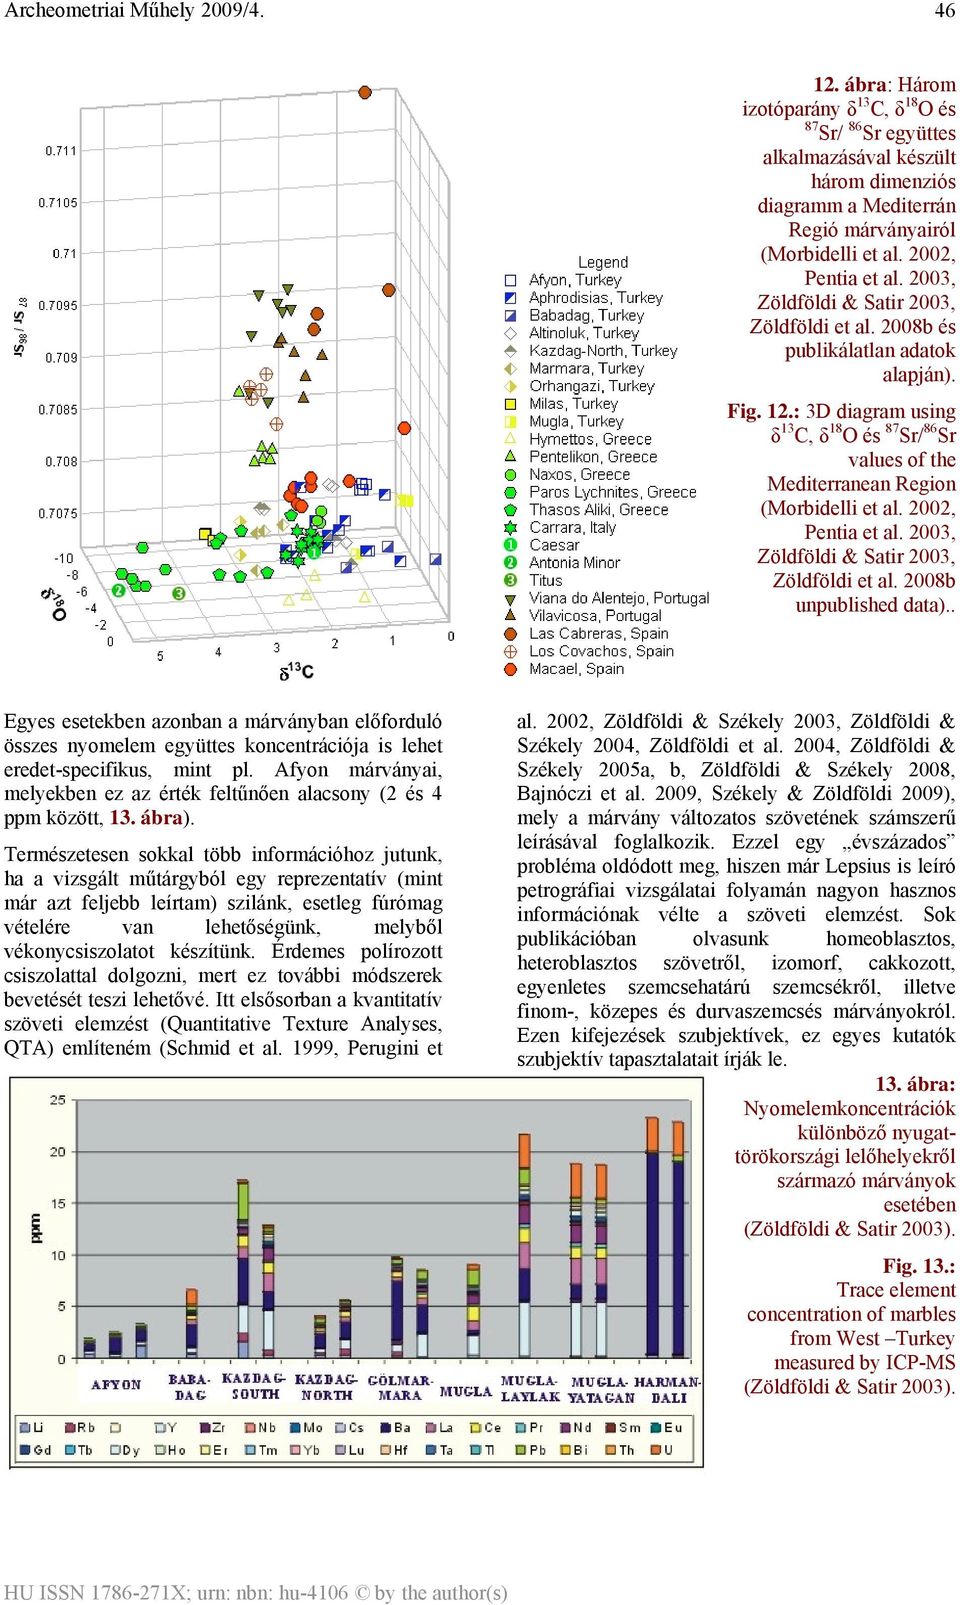 2002, Pentia et al. 2003, Zöldföldi & Satir 2003, Zöldföldi et al. 2008b unpublished data).